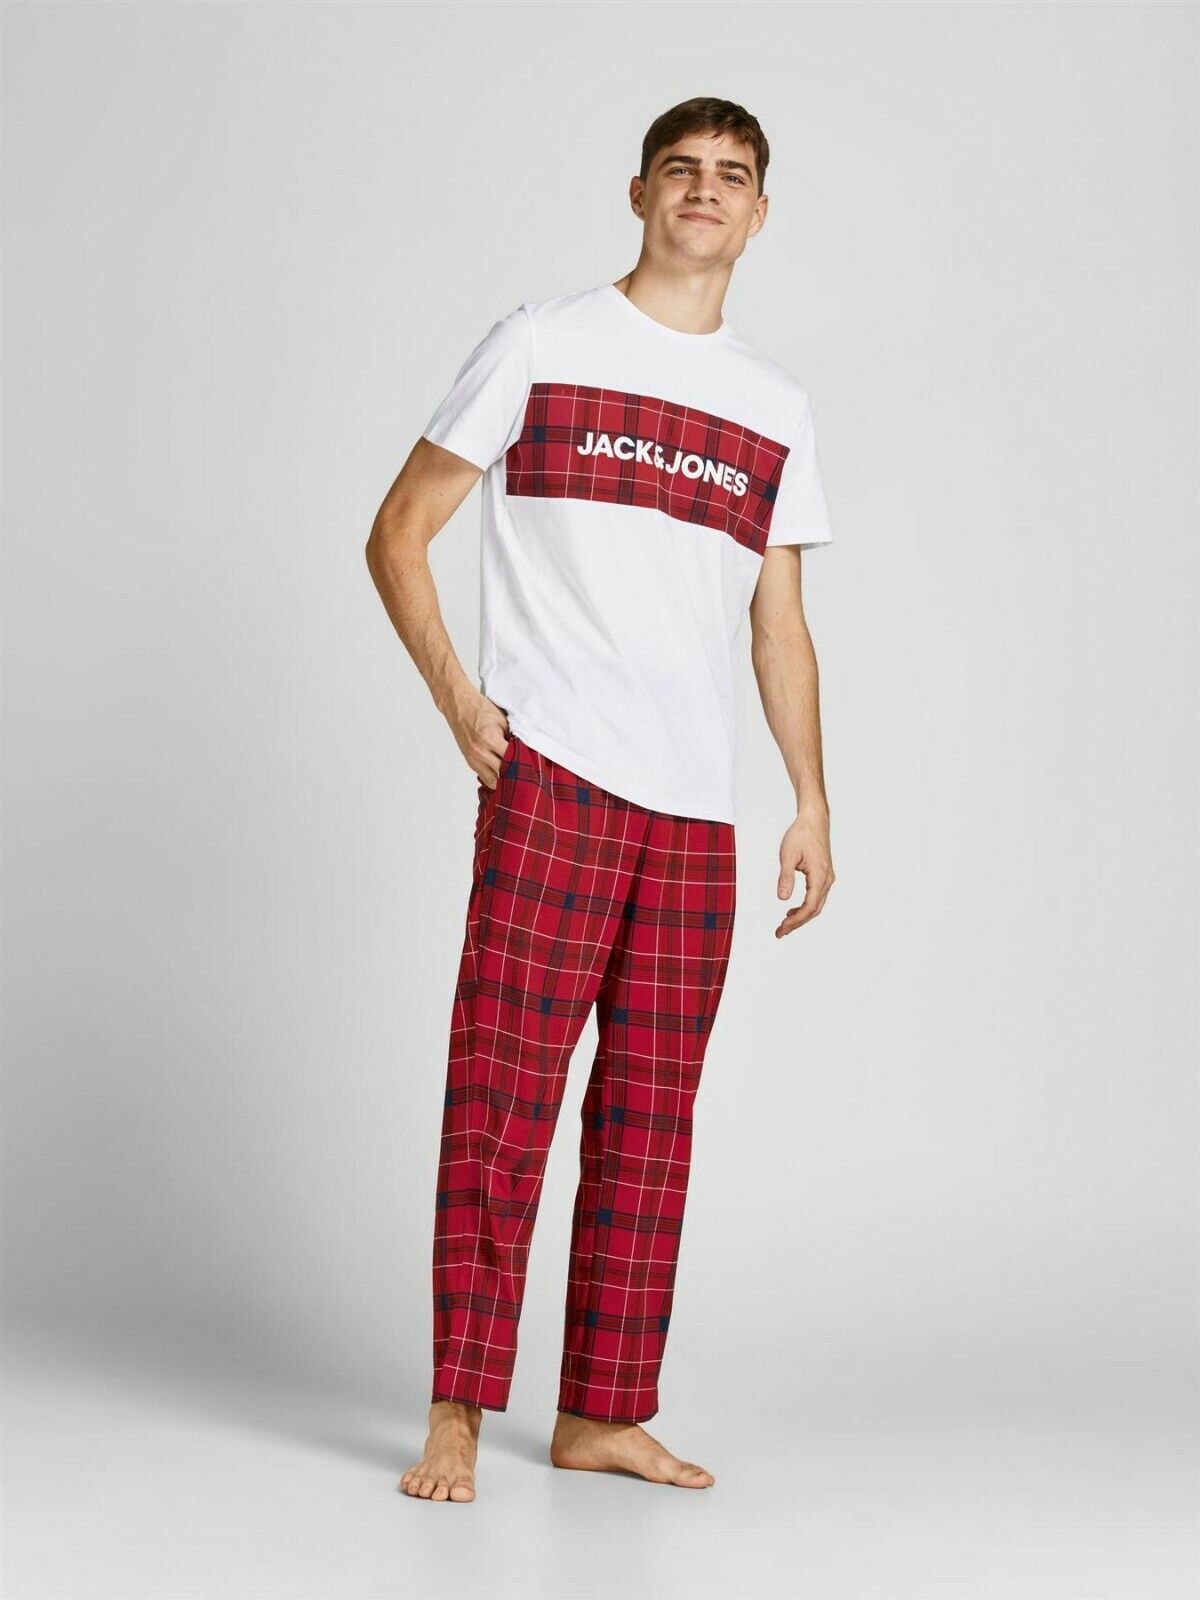 Jack & Jones 'Train' Pyjama Set in Red - VR2 Clothing